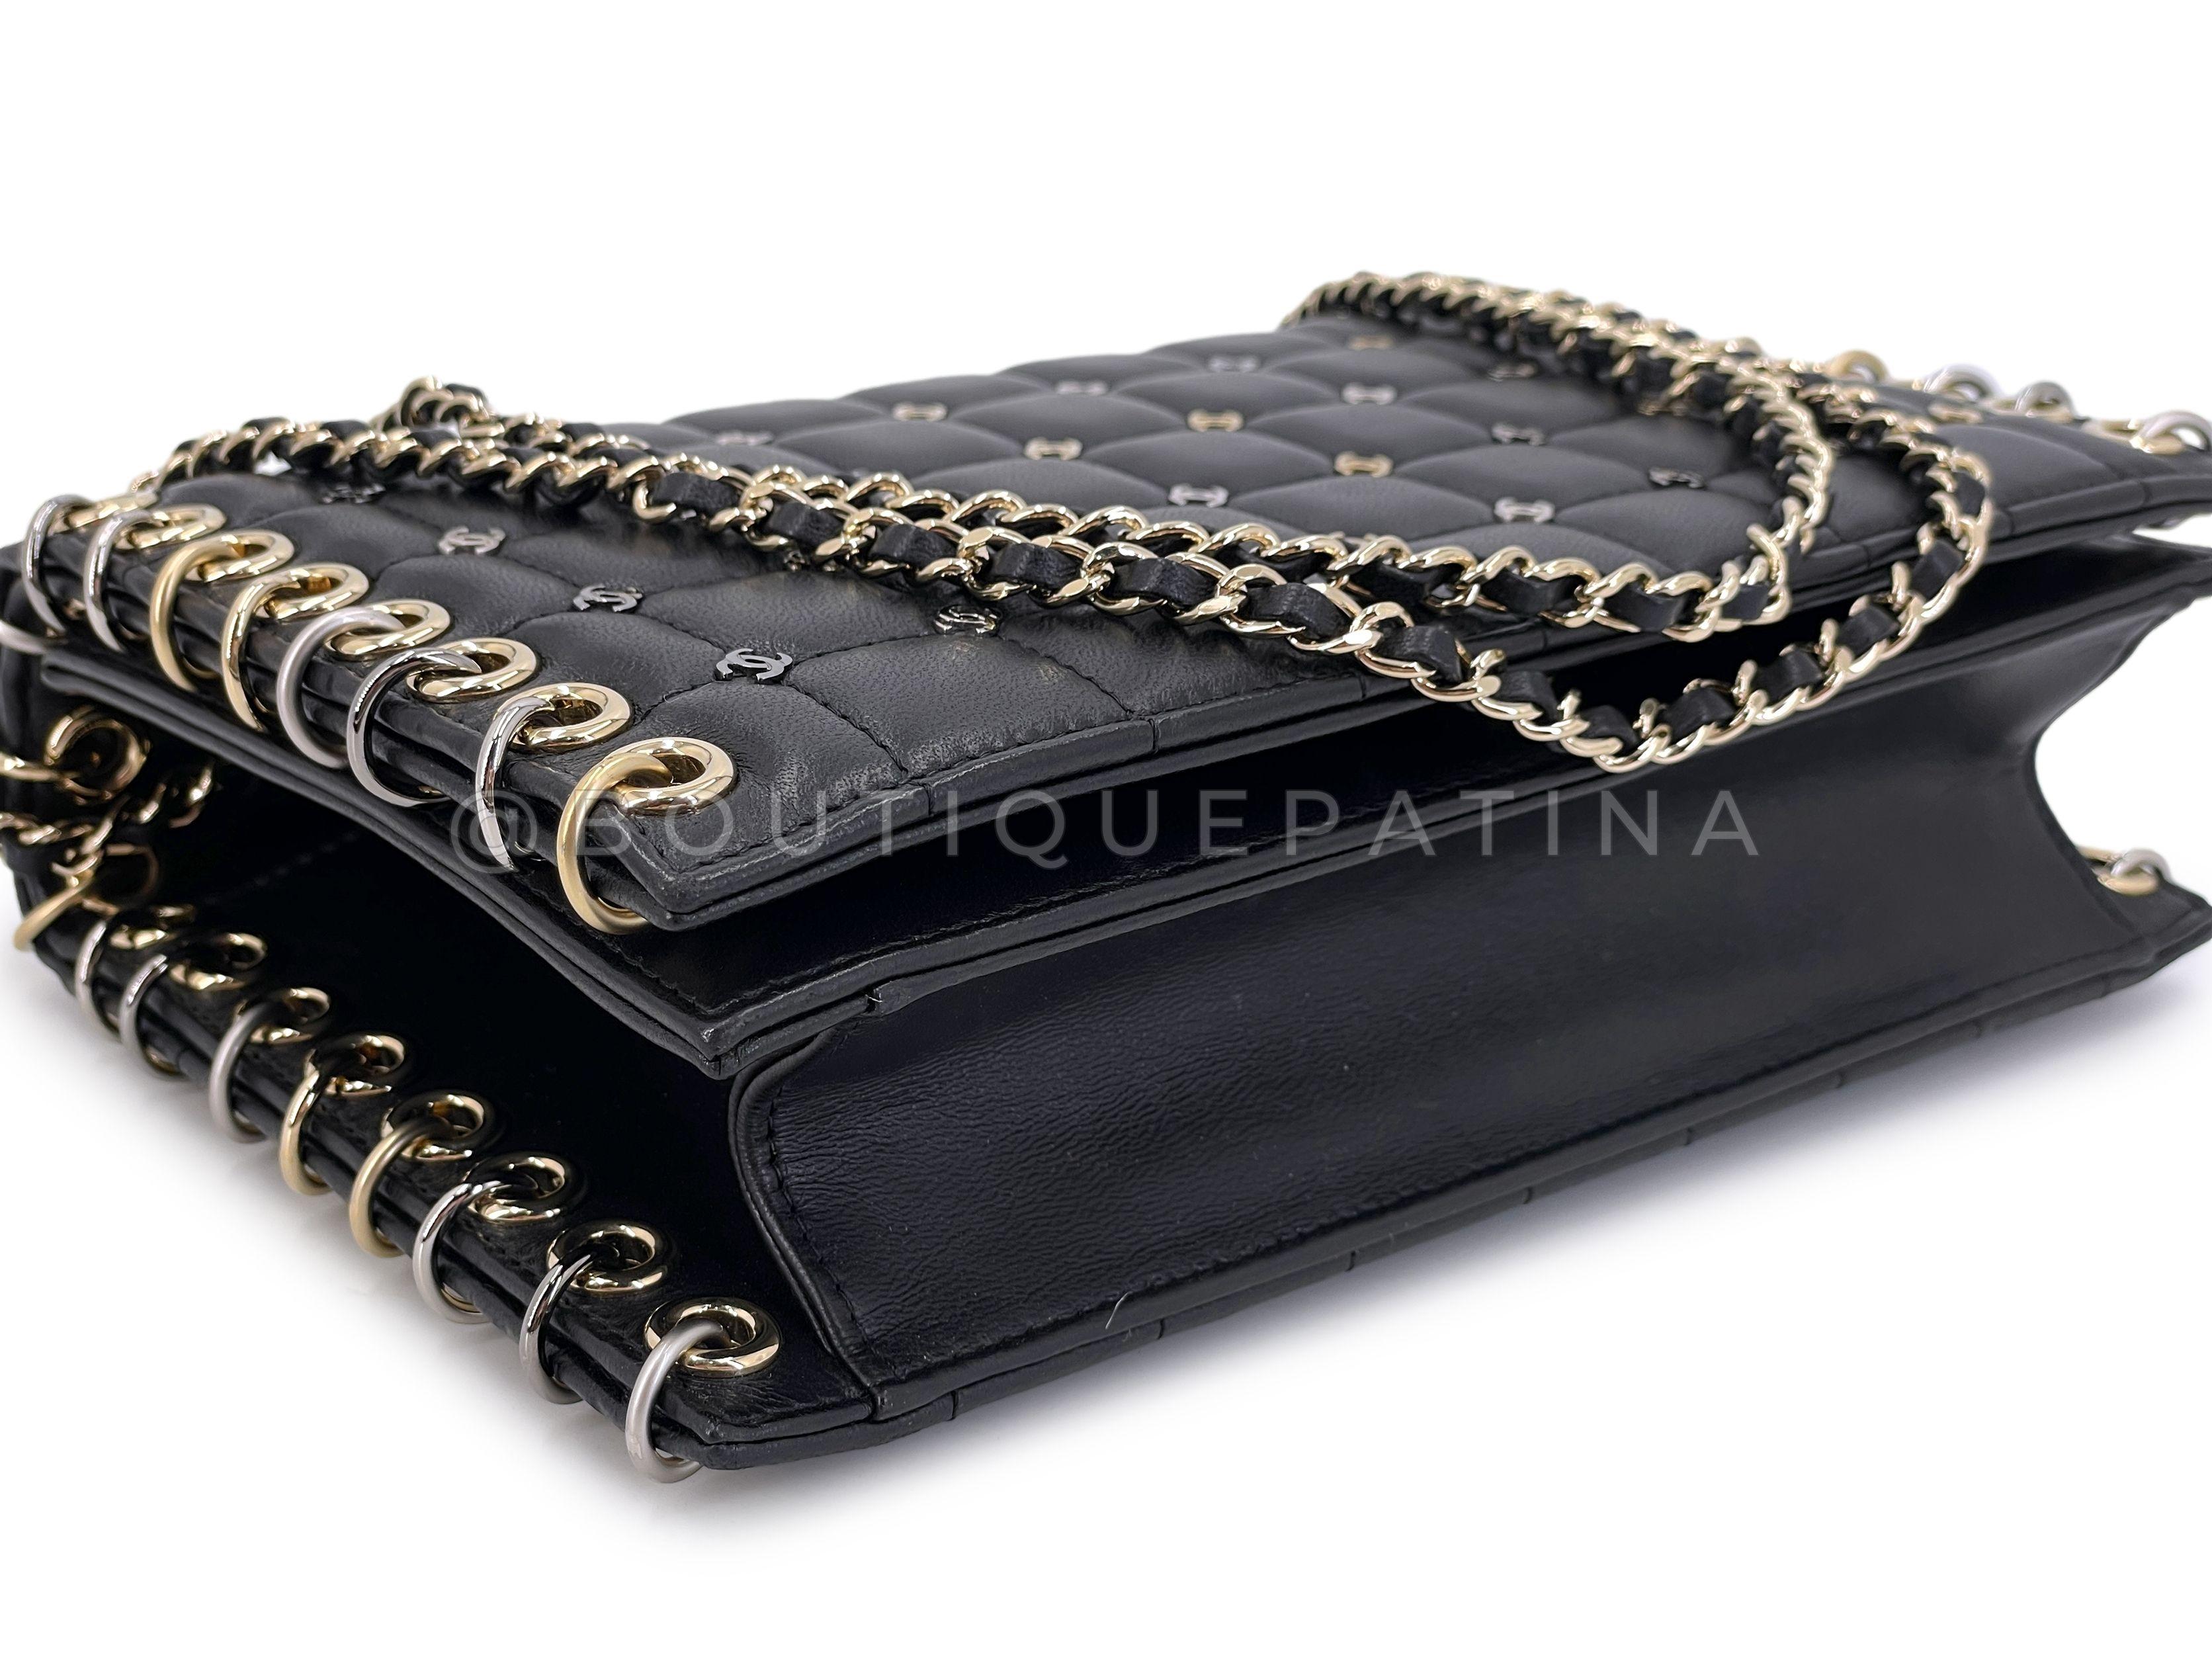 Pristine Chanel 16B Punk CC-Studded Piercing Clutch on Chain Bag Black 67544 For Sale 3